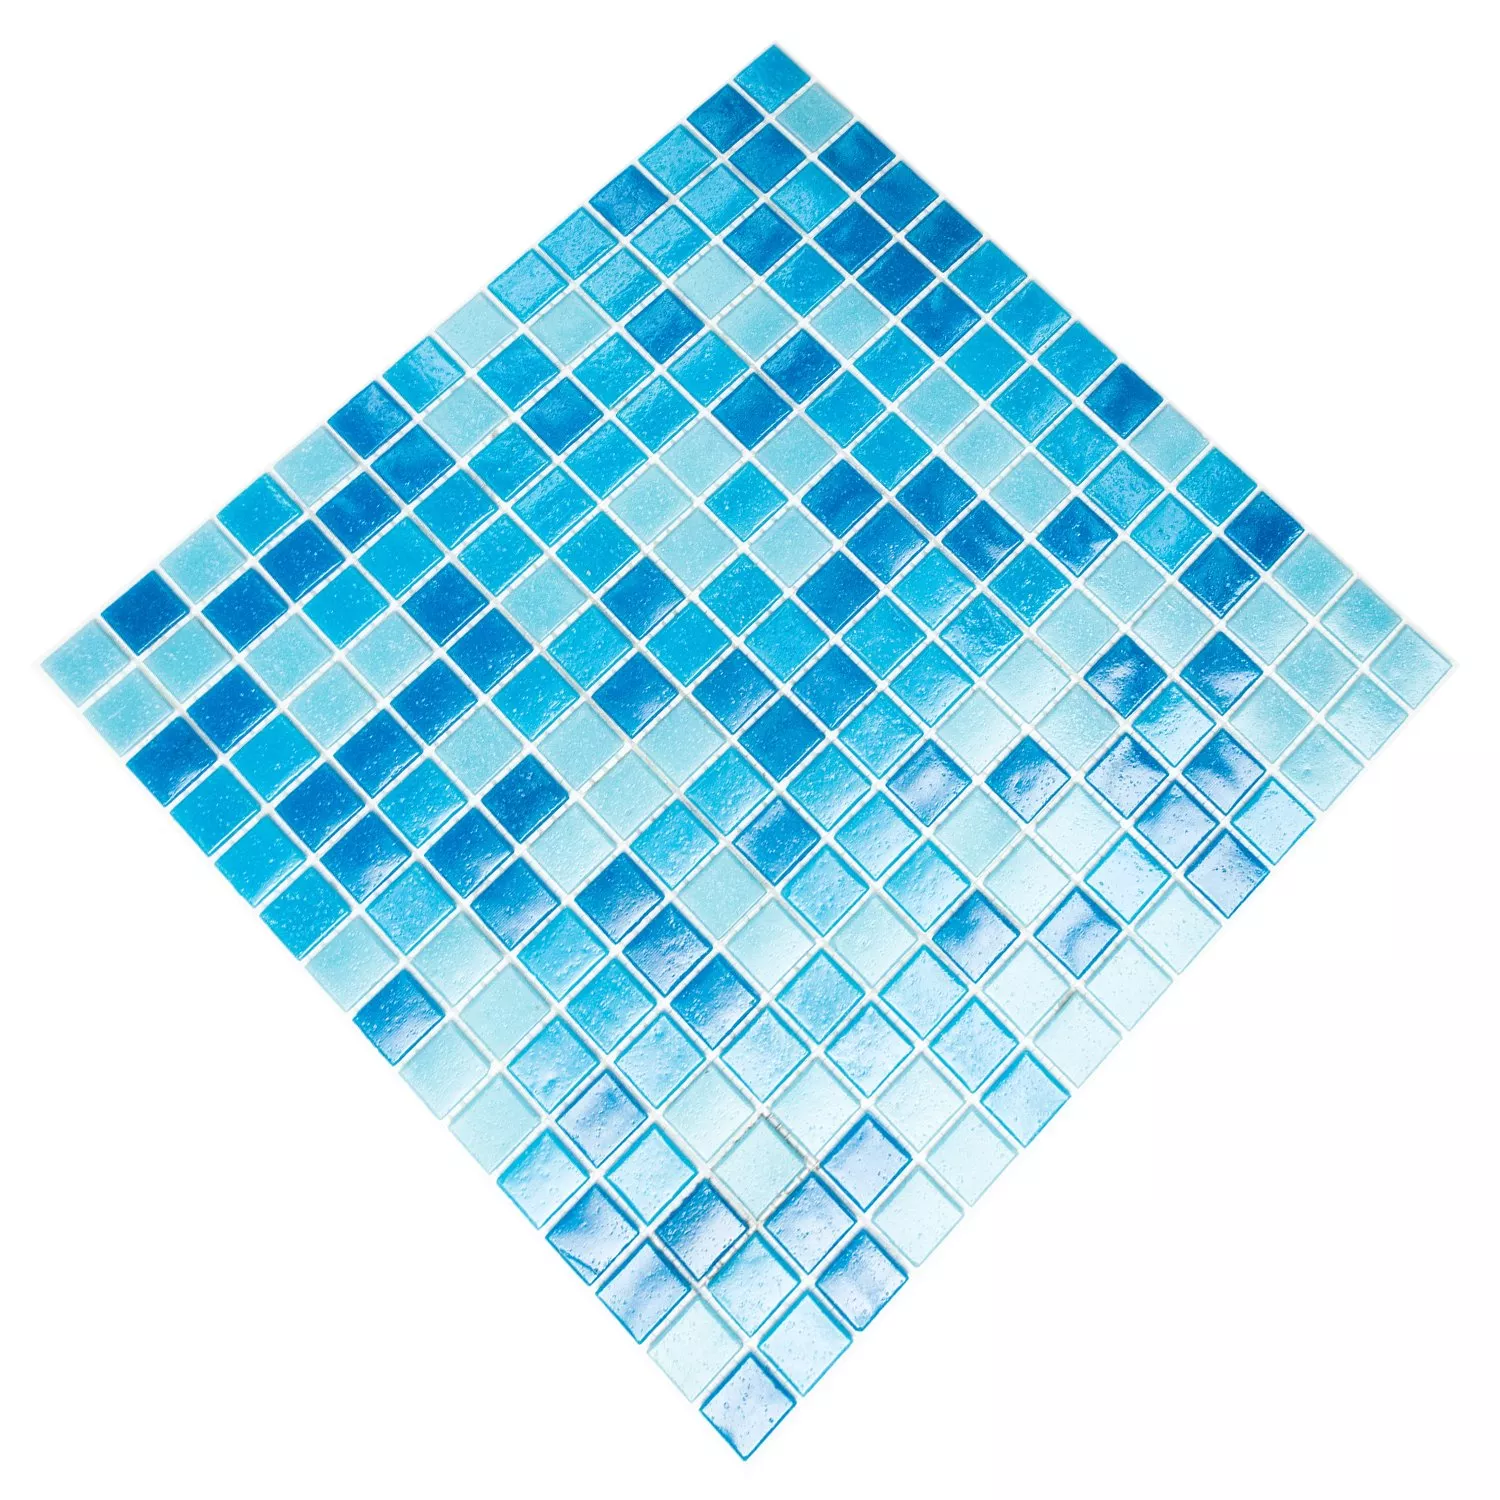 Schwimmbad Pool Mosaik Pazifik Papierverklebt